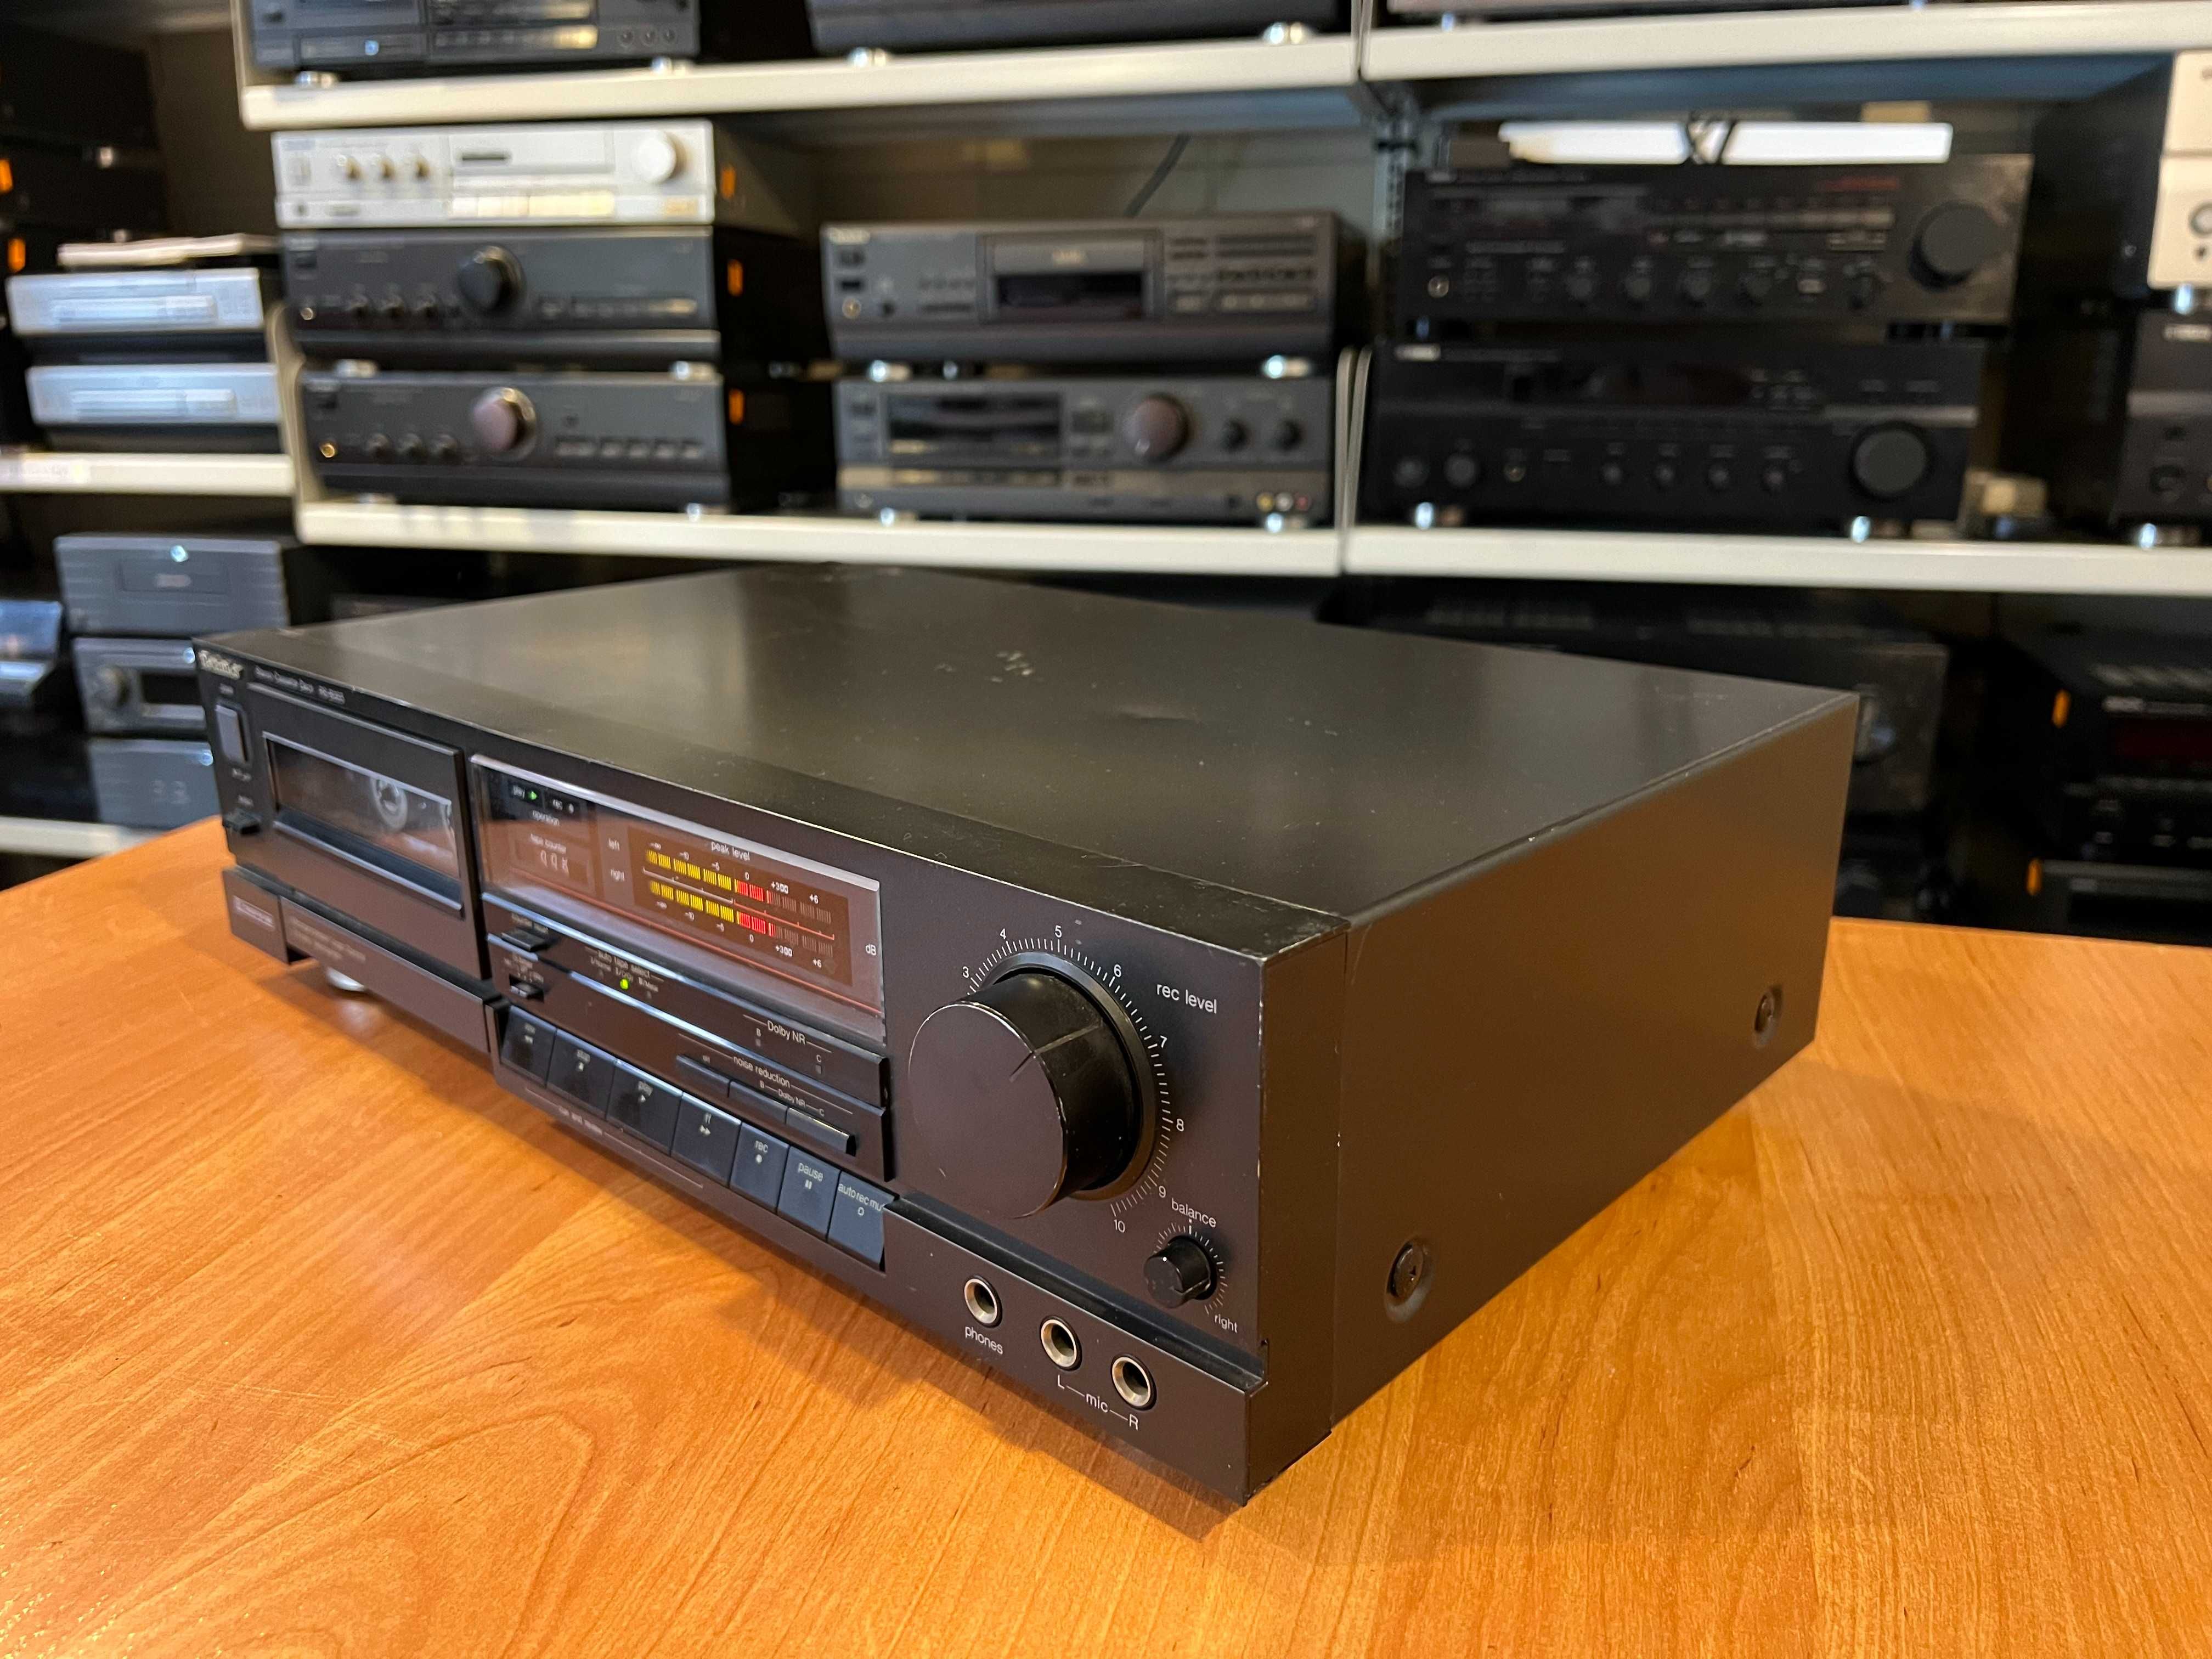 Magnetofon kasetowy Technics RS-B355 Audio Room